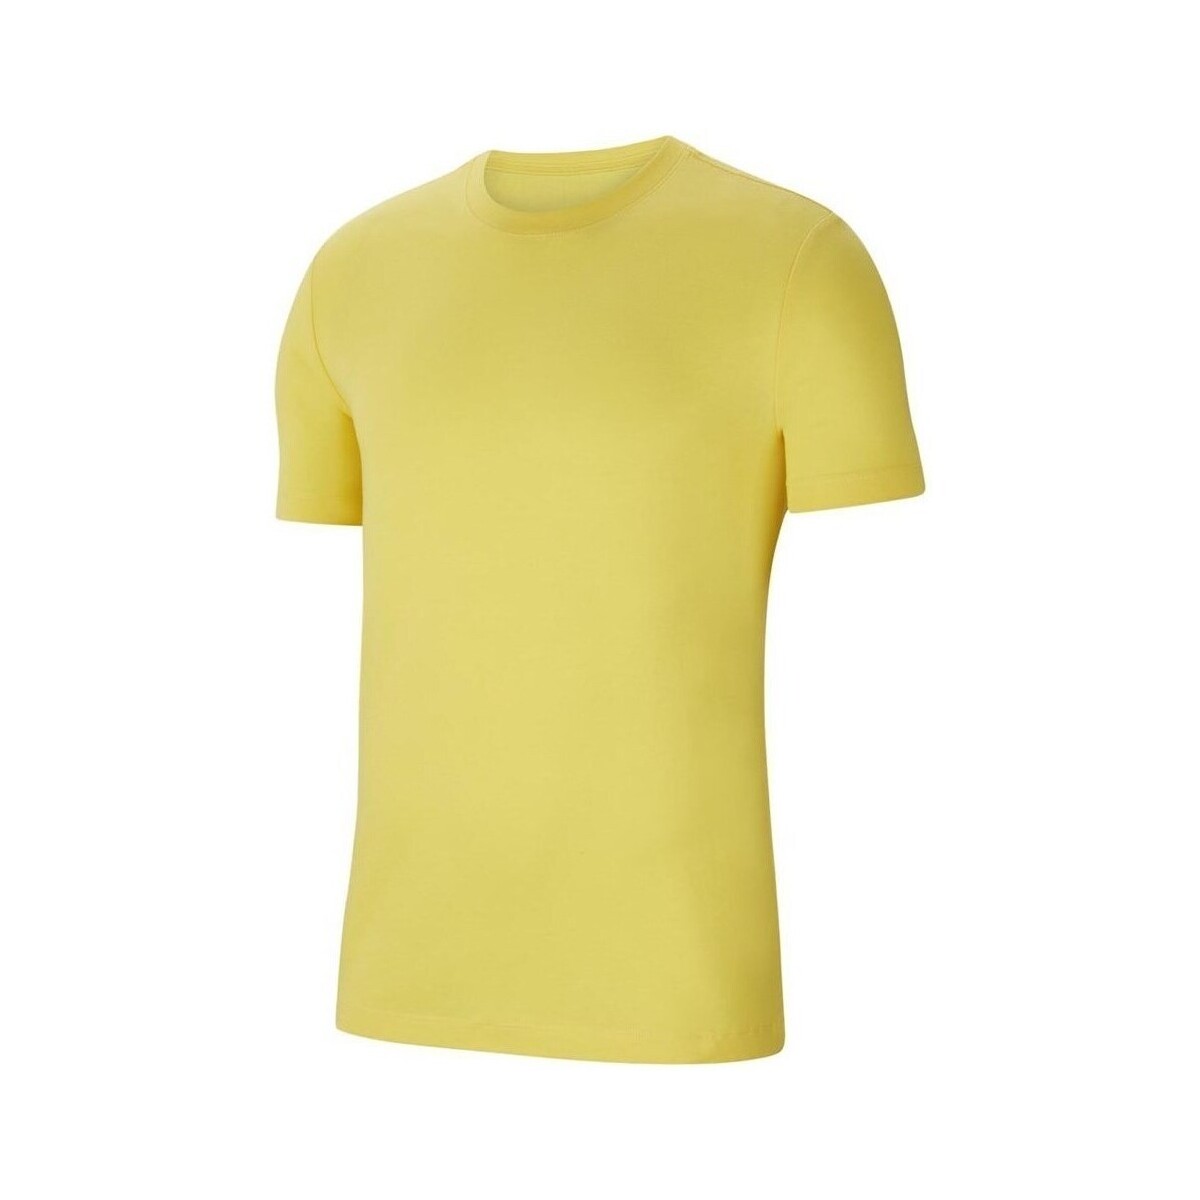 textil Herr T-shirts Nike Park 20 Tee Gul